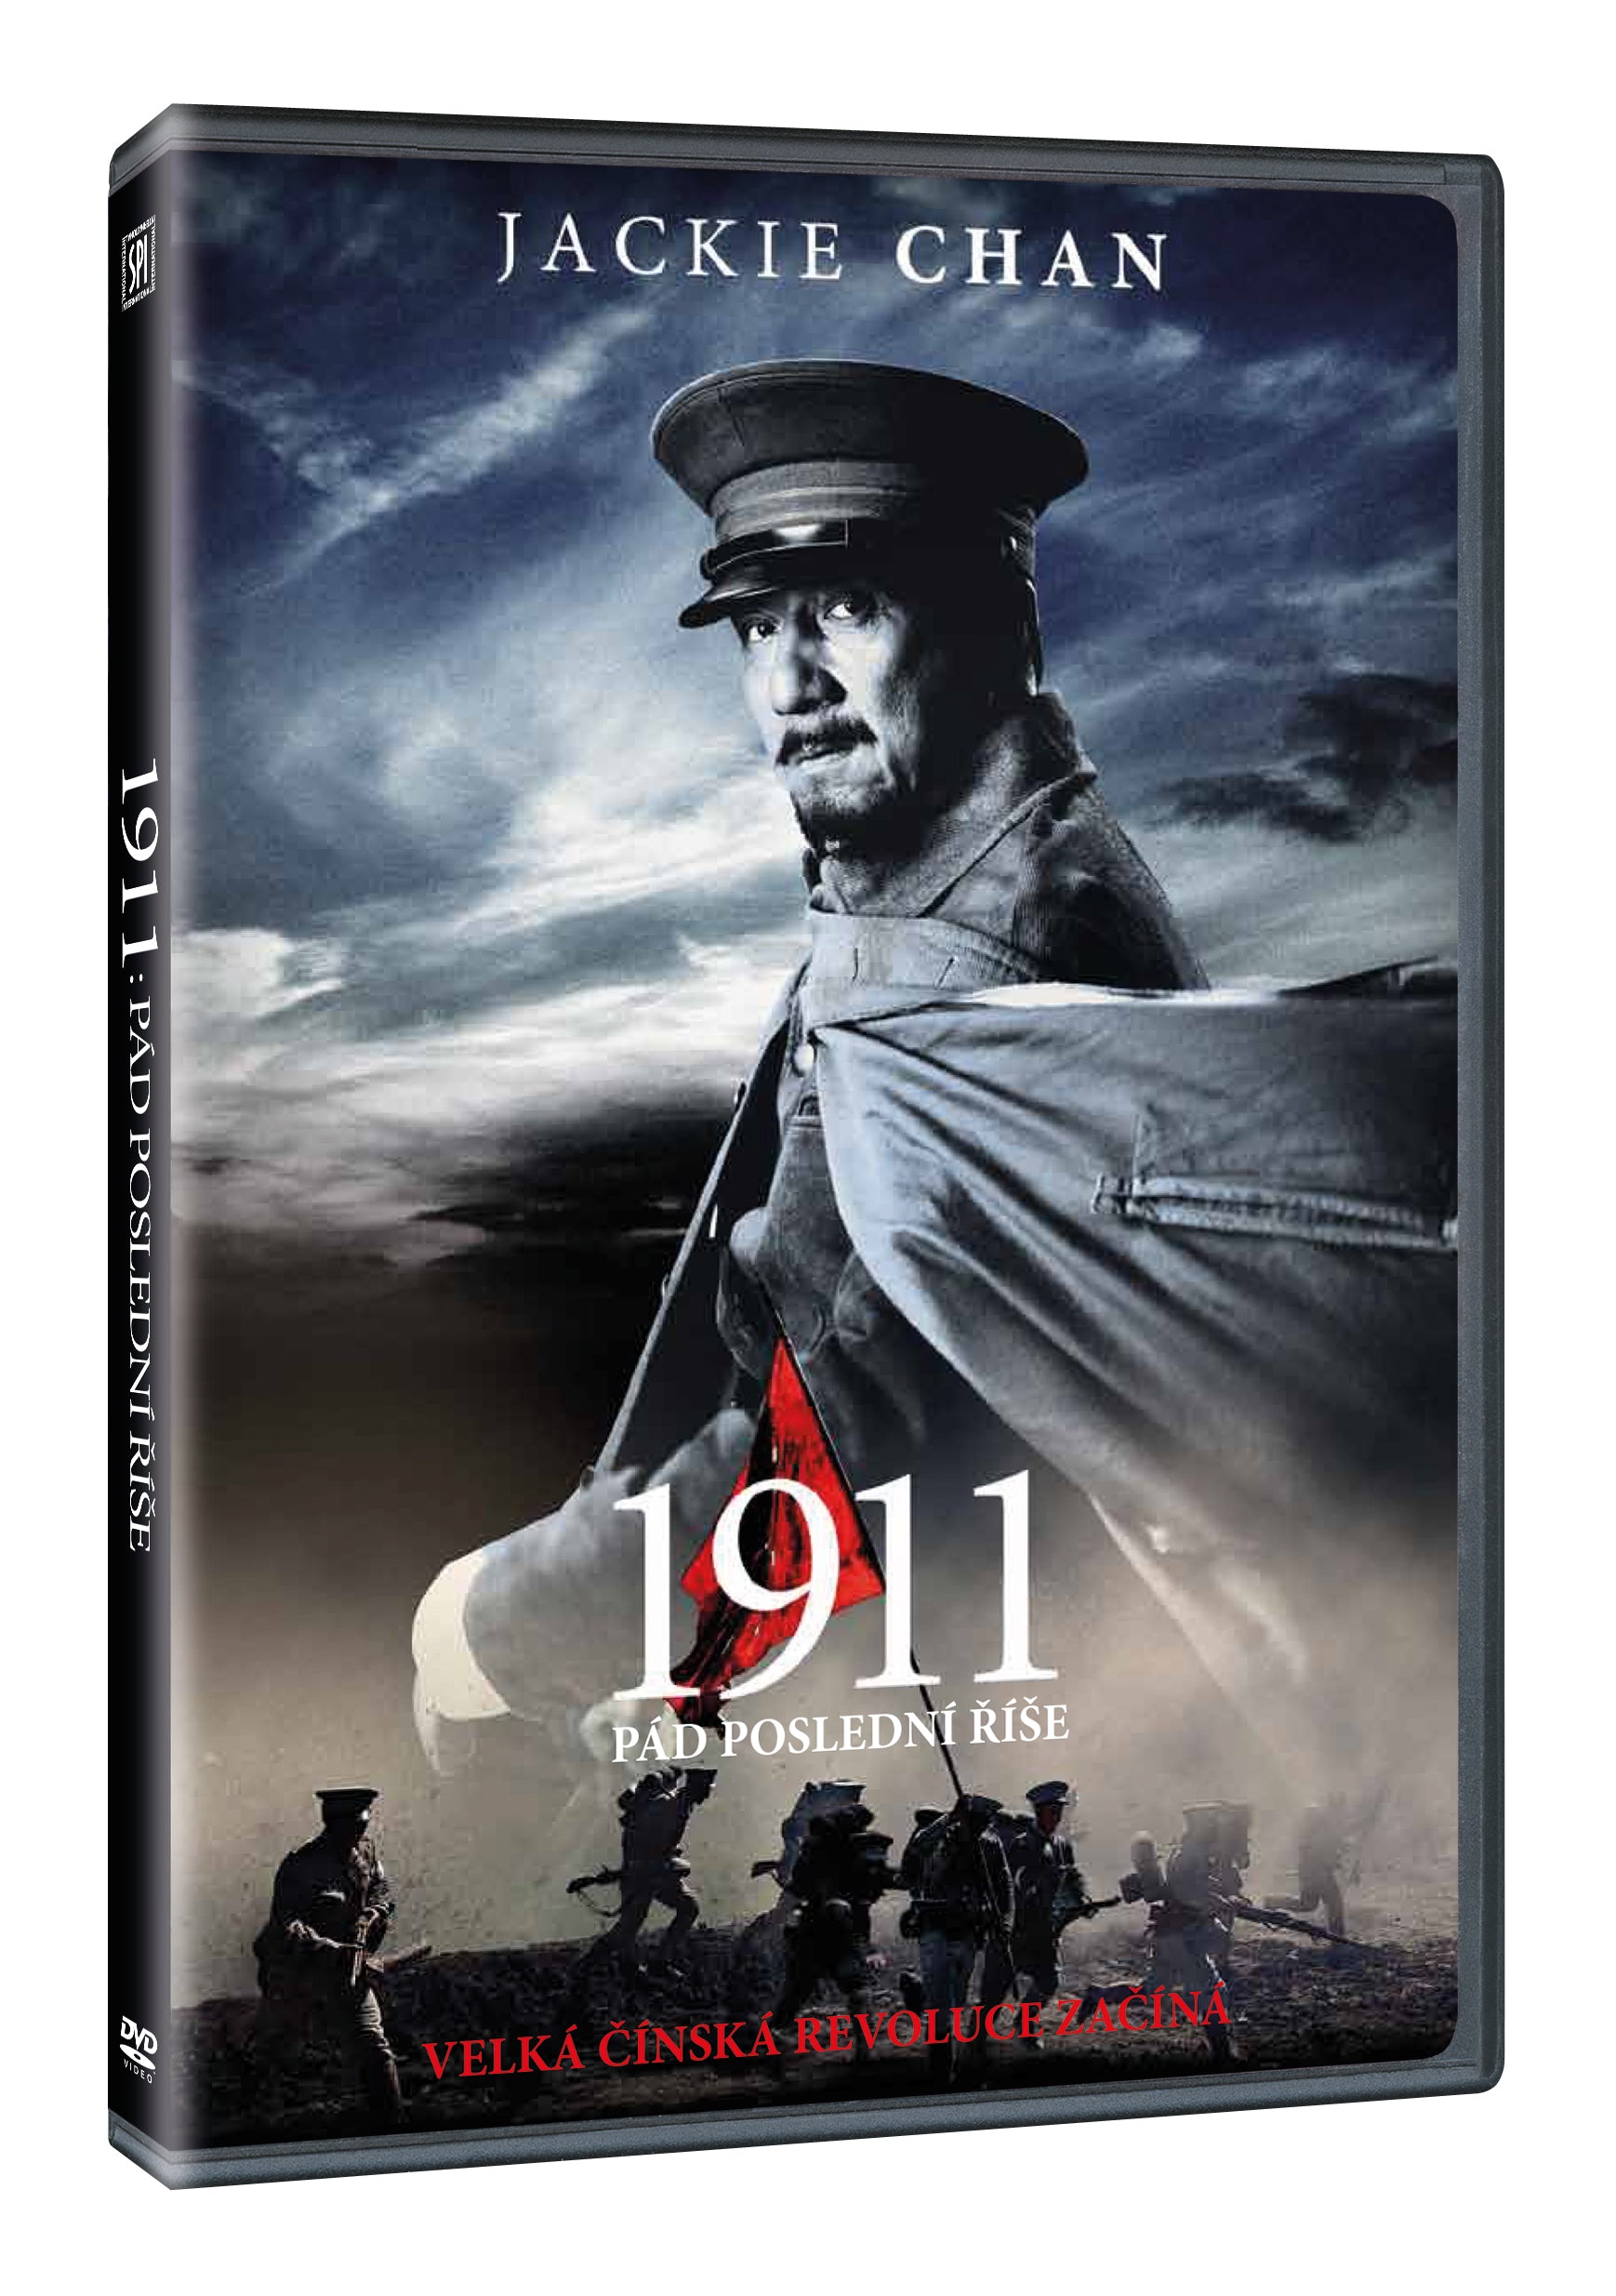 1911: Pad posledni rise DVD / 1911 Revolution